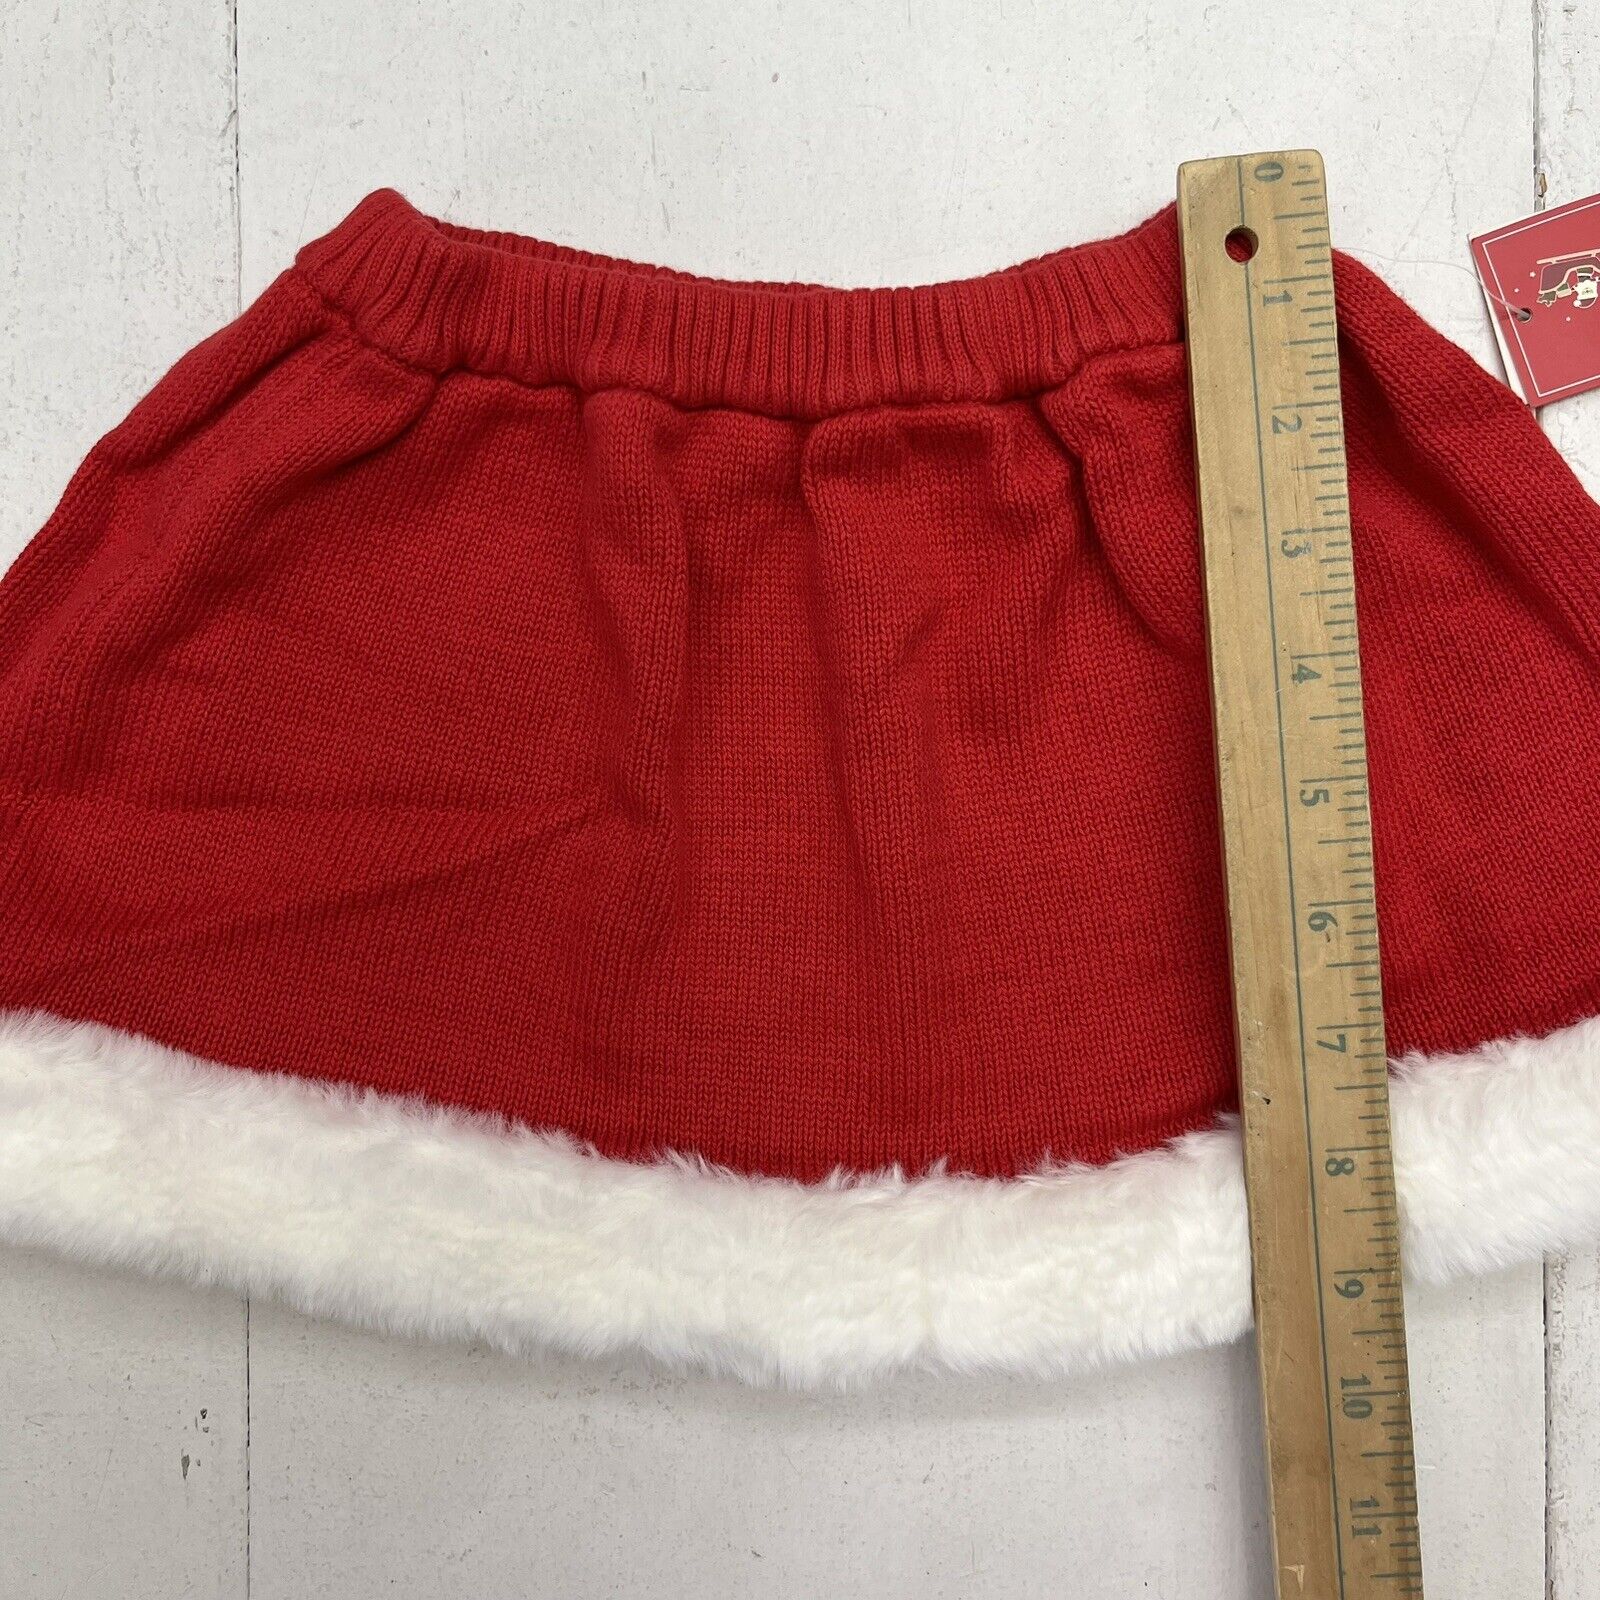 Gymboree Christmas Holiday Present Leggings Girls Size 3T New